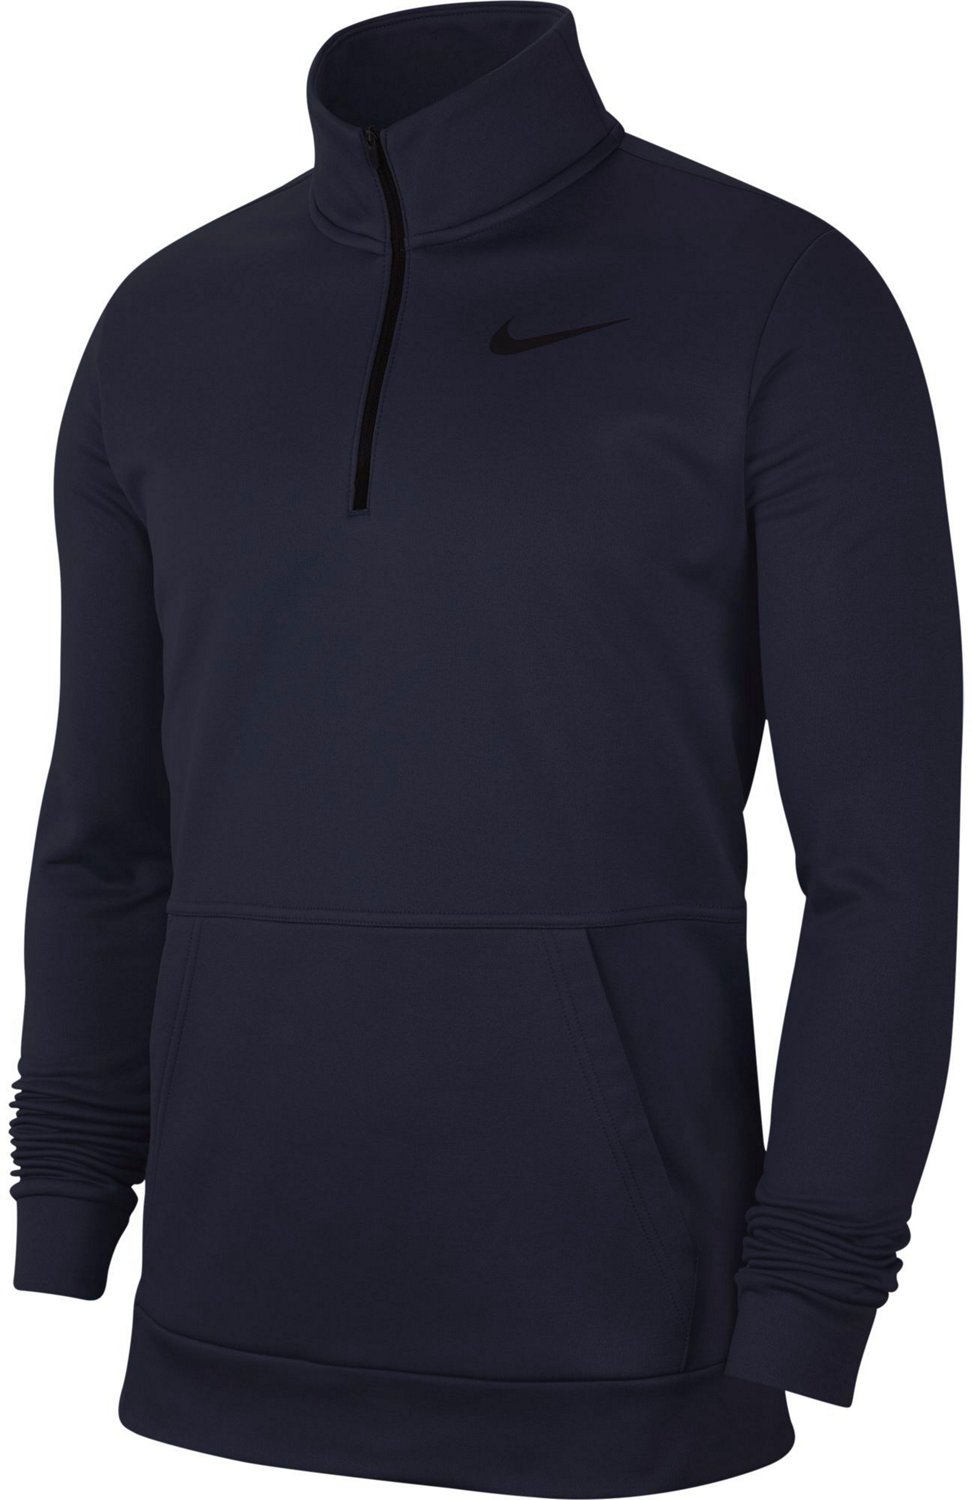 Nike Men's Therma 1/4 Zip Long Sleeve Training Top | Academy